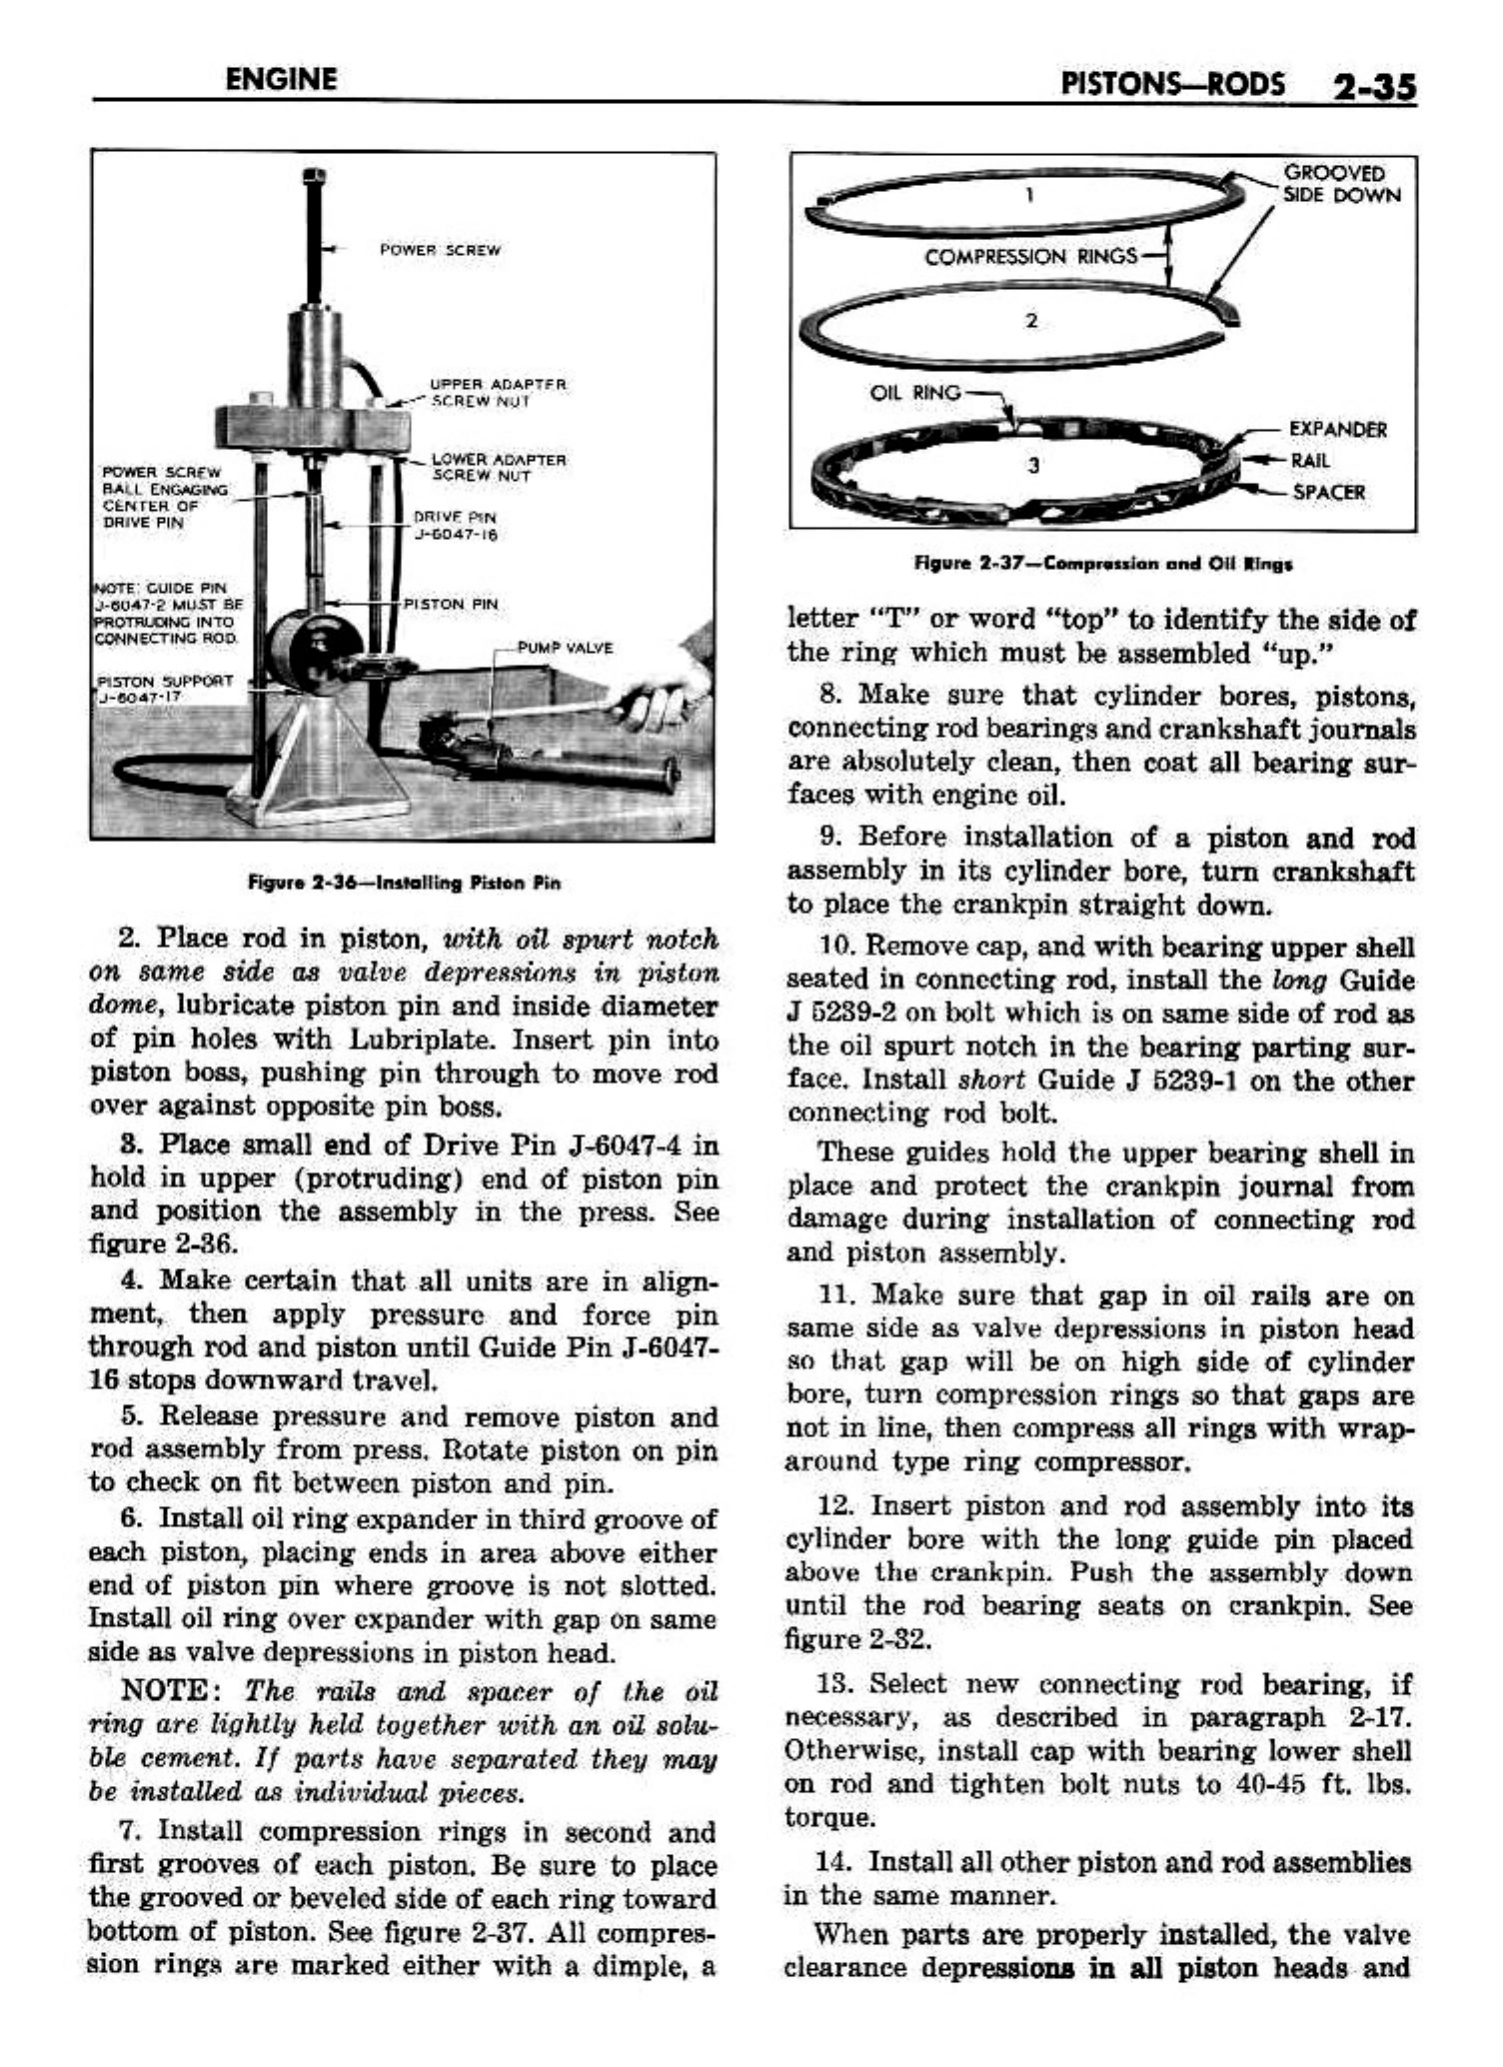 n_03 1958 Buick Shop Manual - Engine_35.jpg